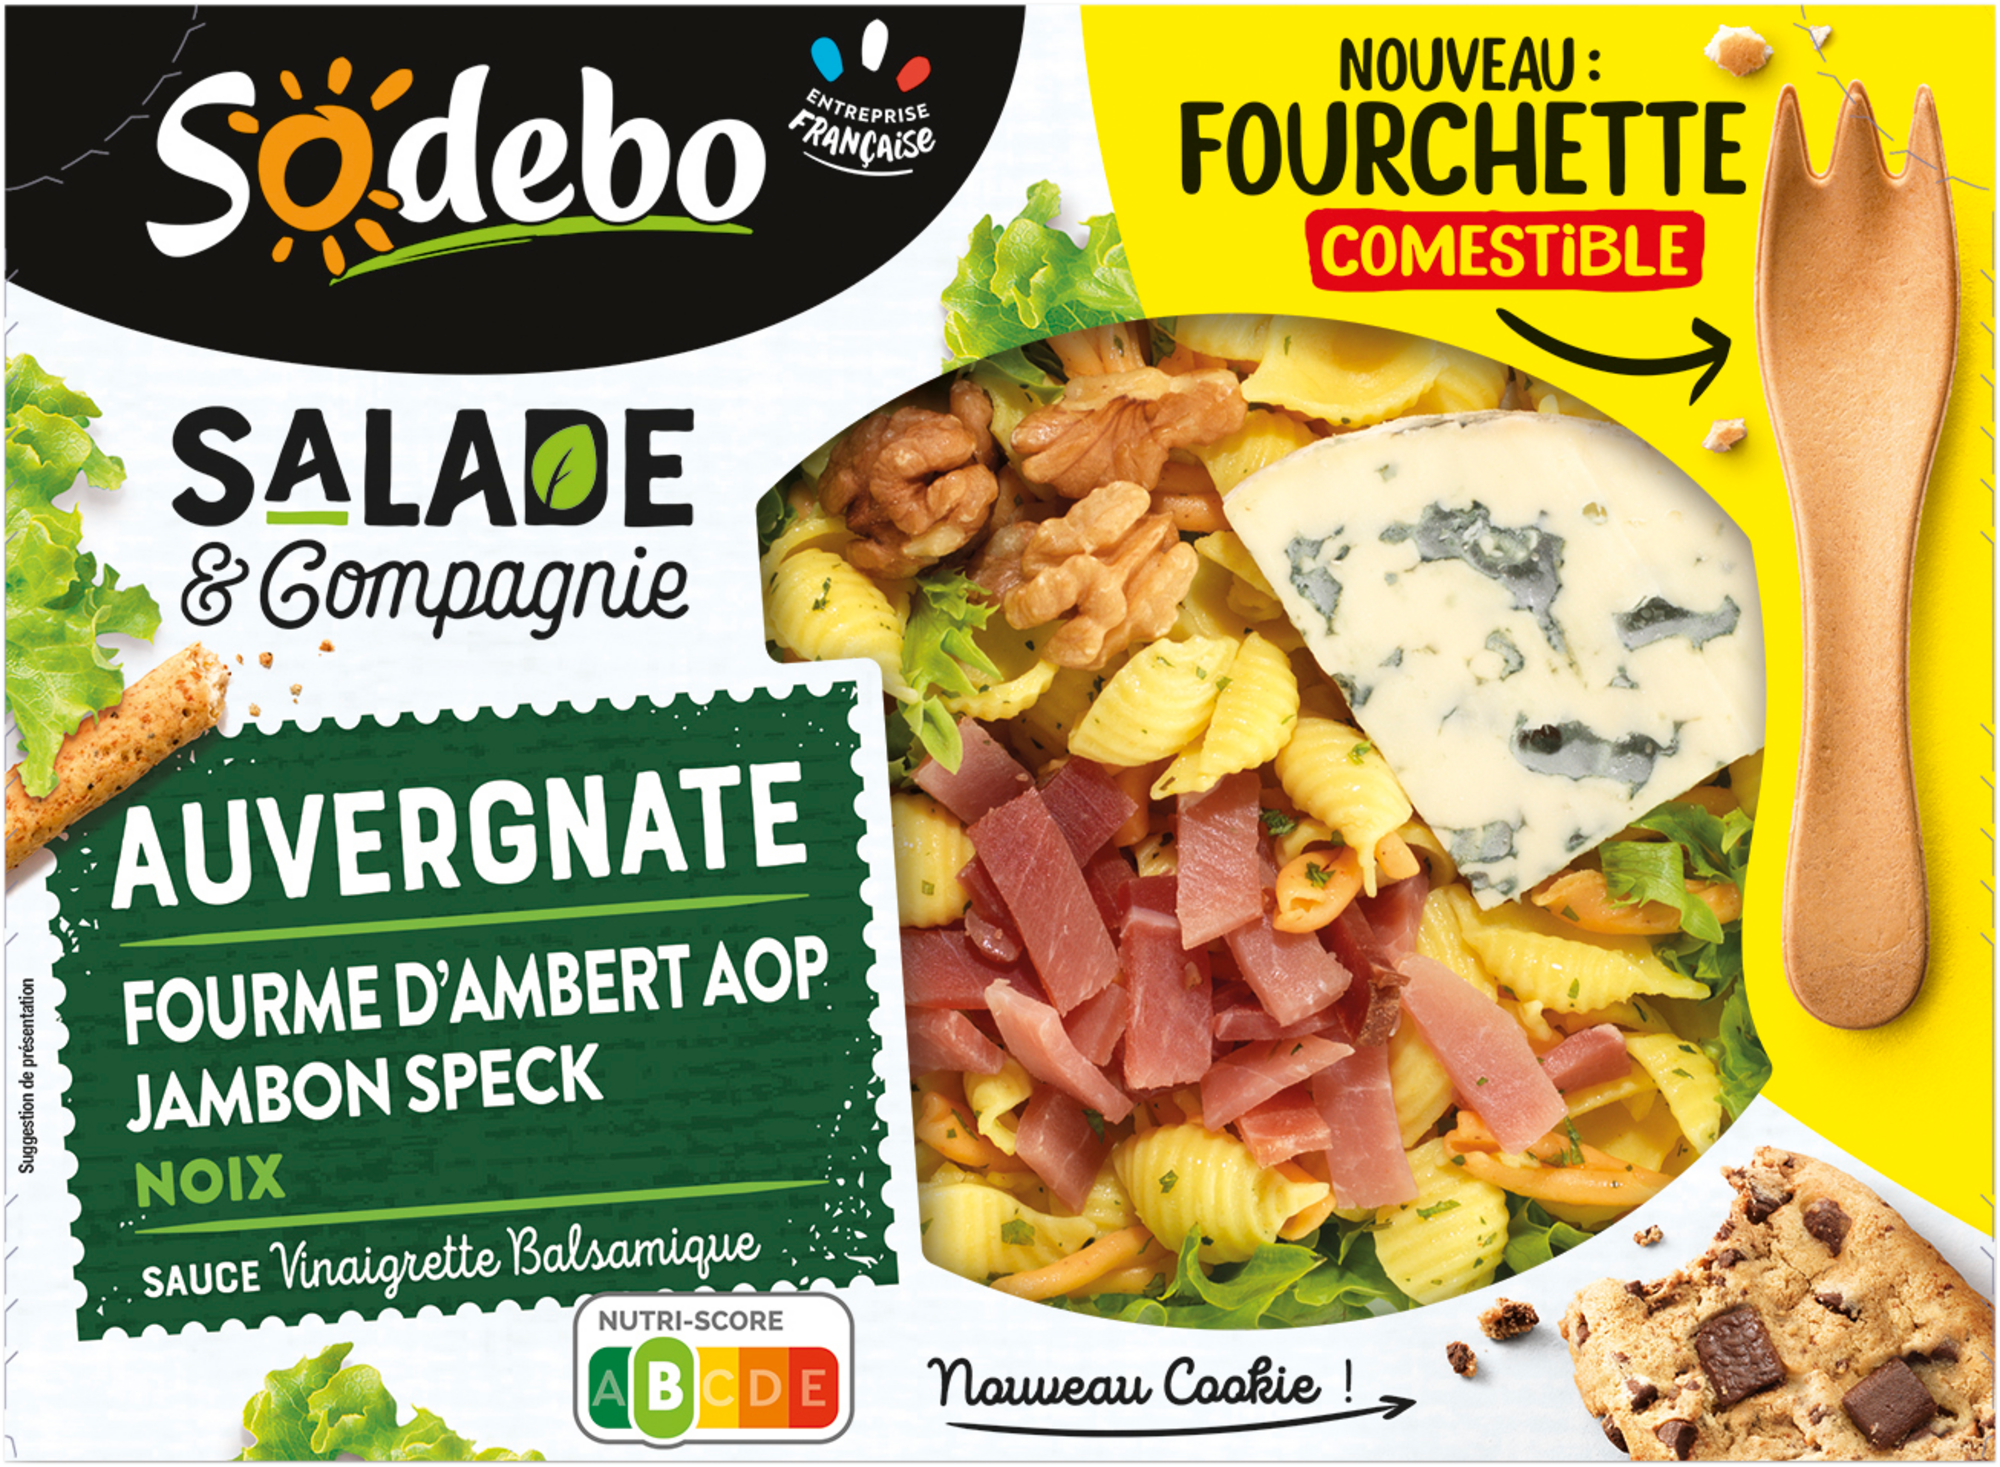 Salade & Compagnie Auvergnate